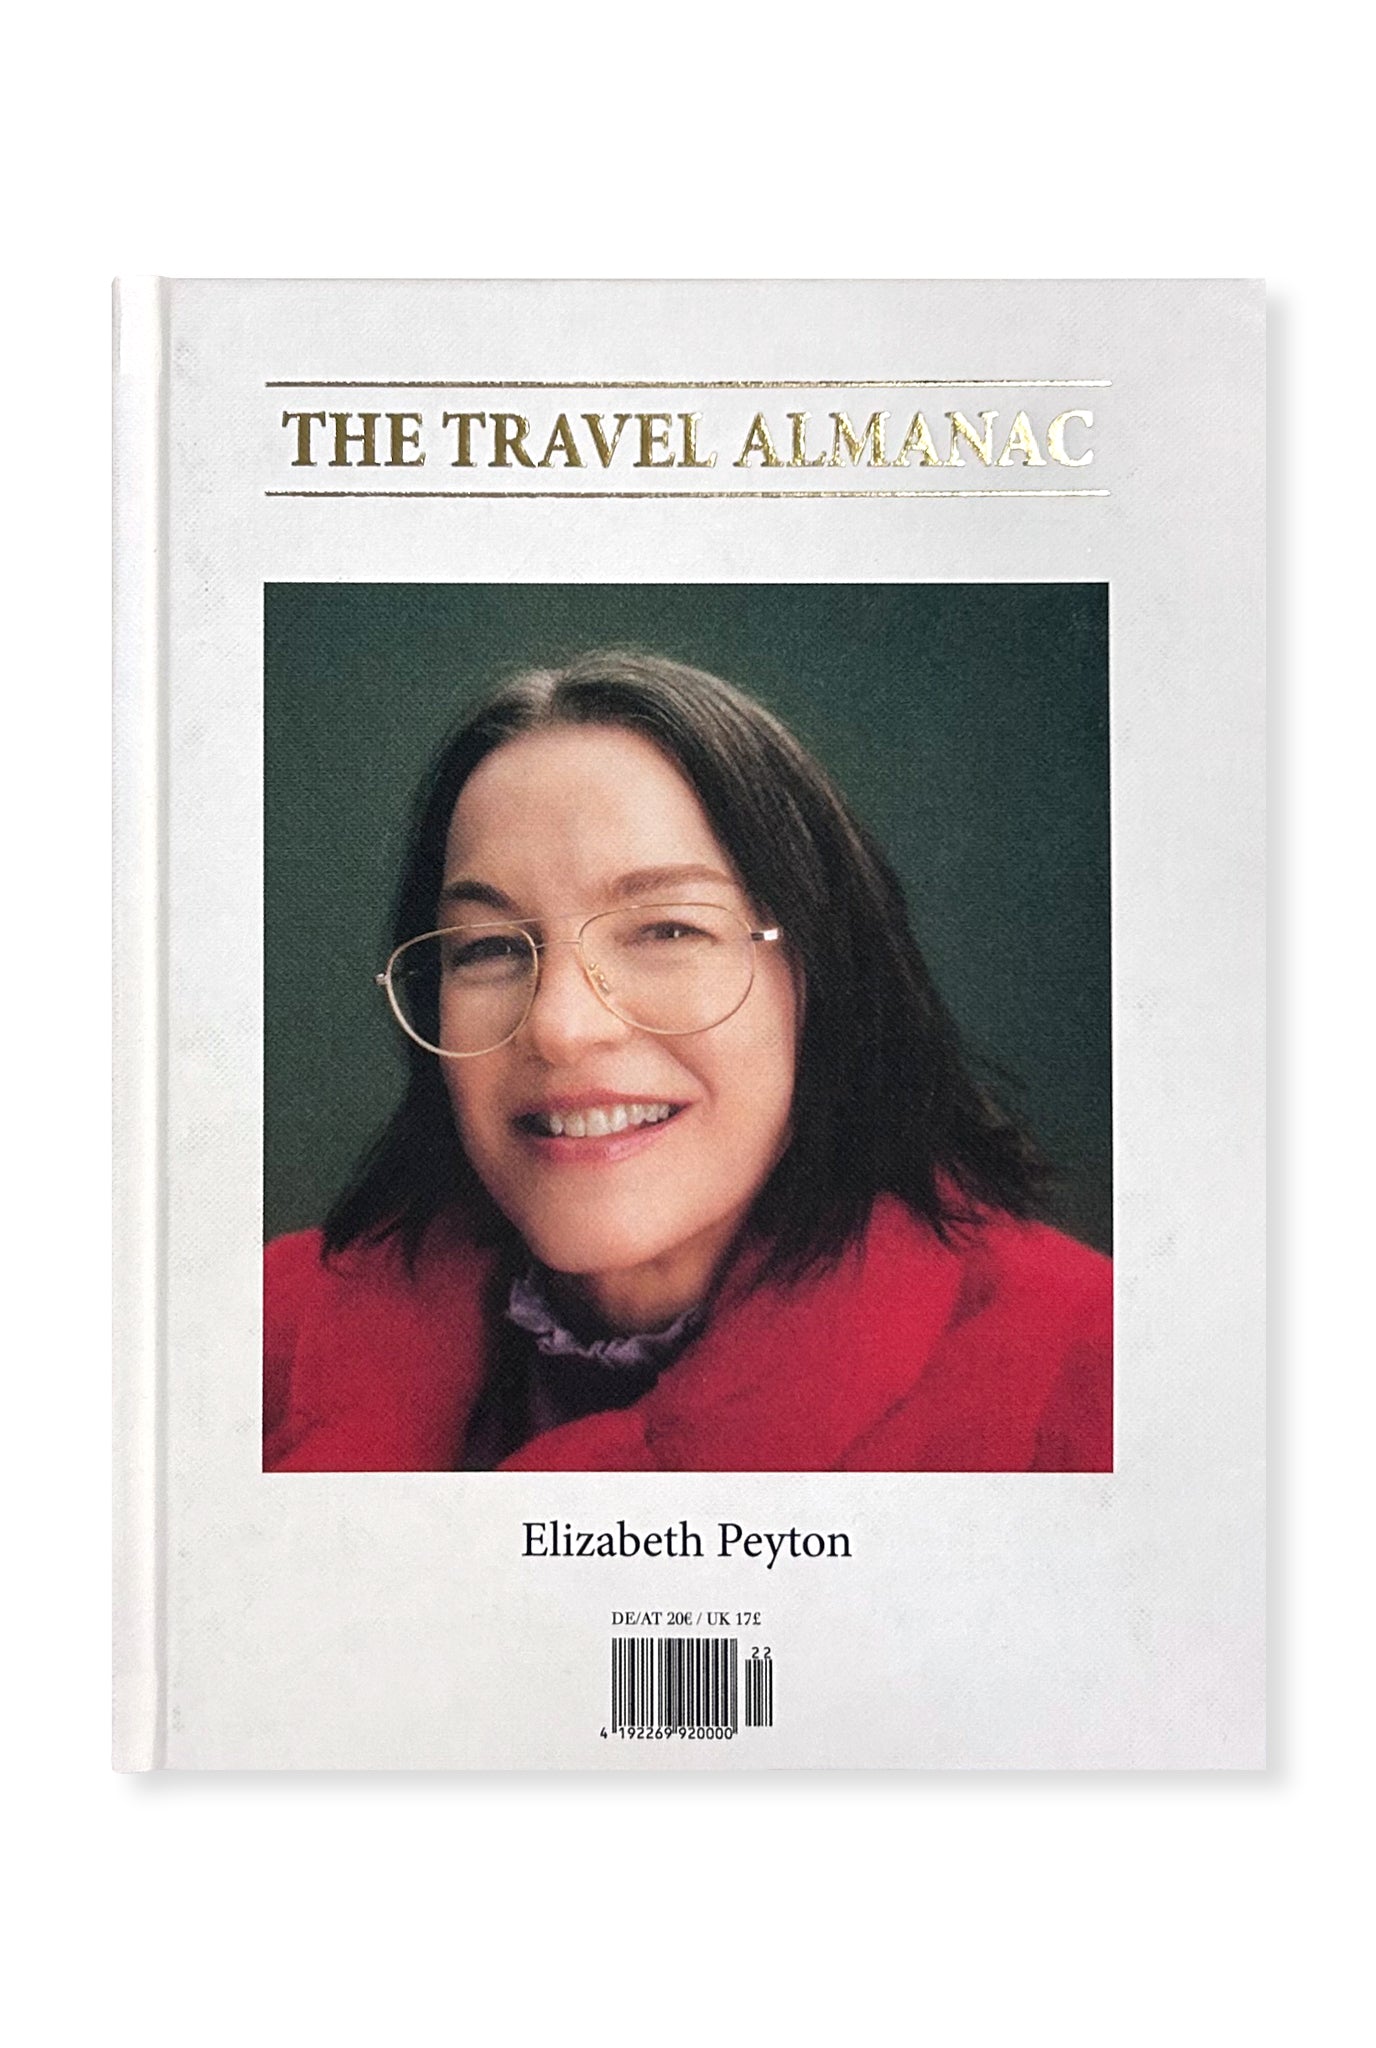 The Travel Almanac, Issue 22